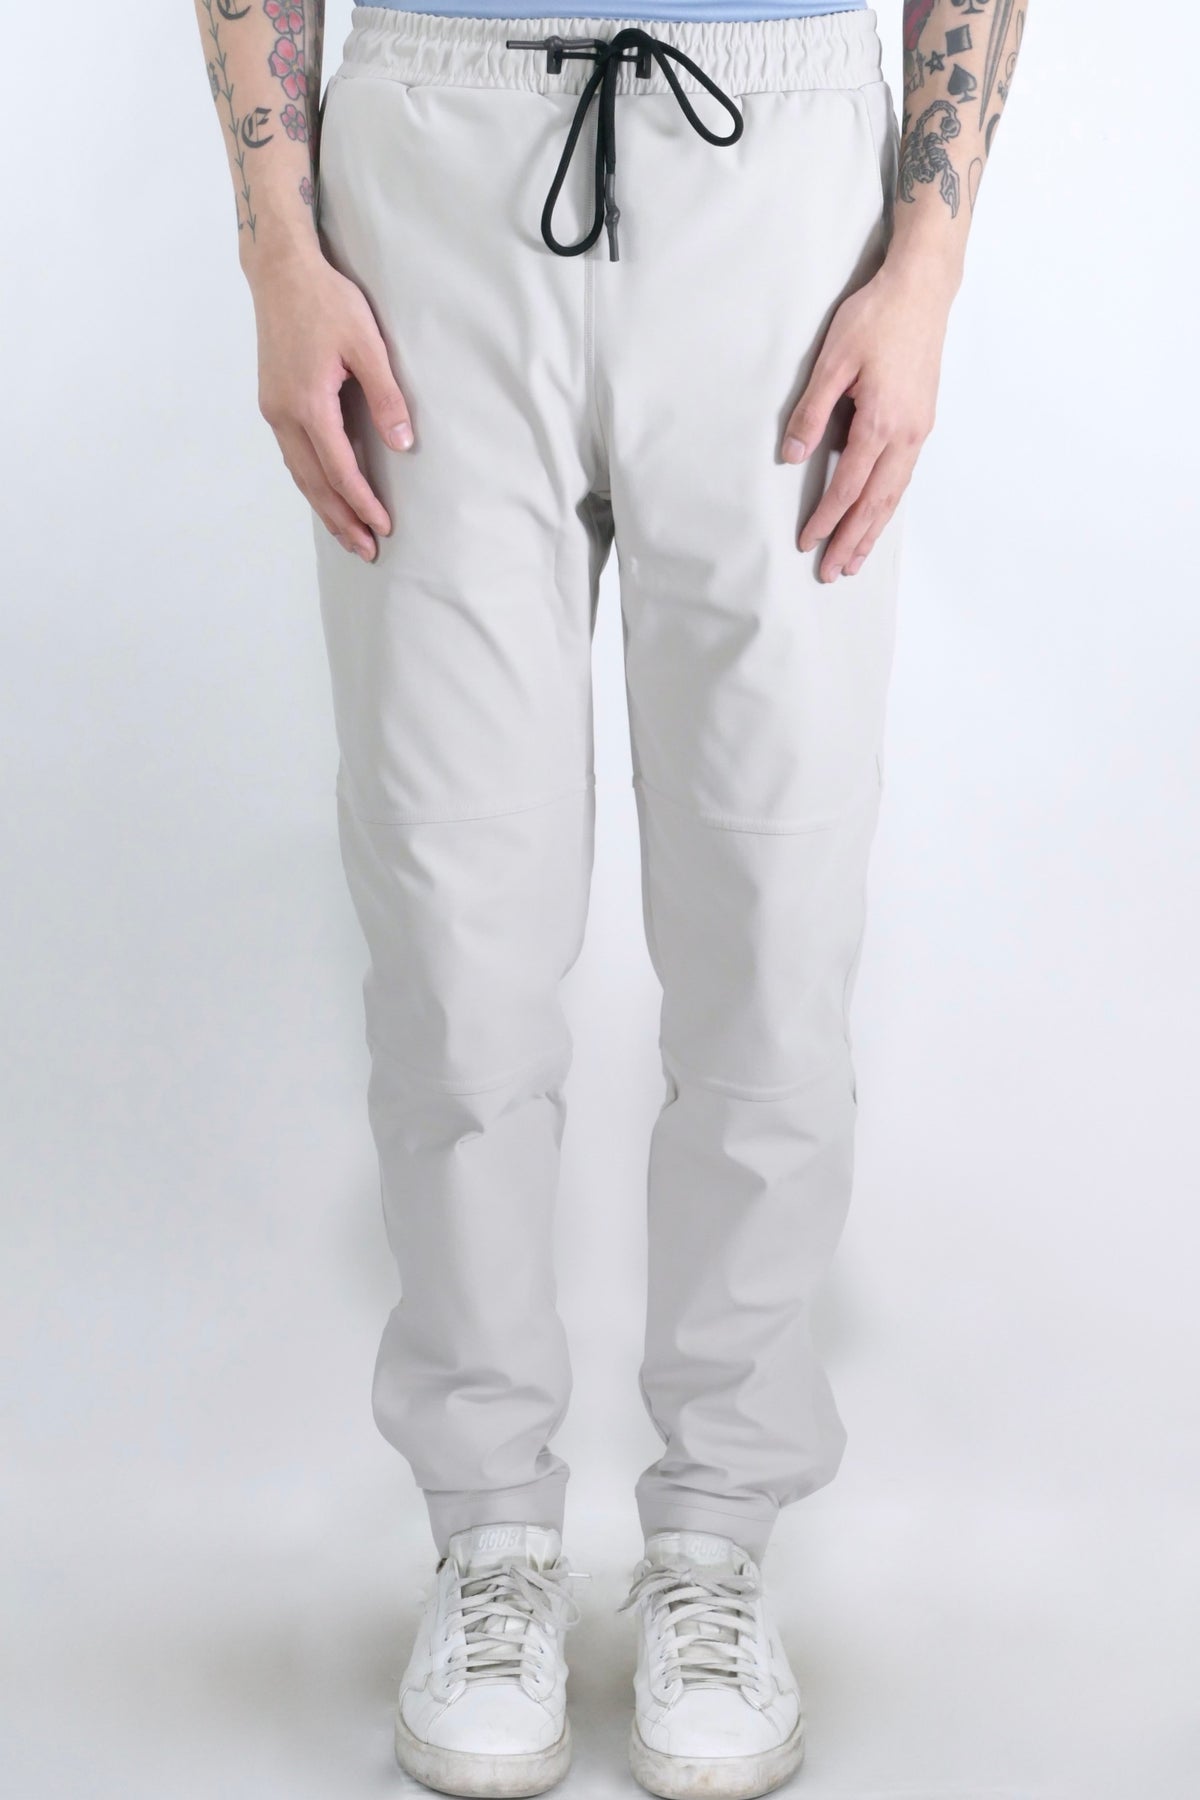 ASRV Kinterra™ Weatherproof Snap Pants - Grey